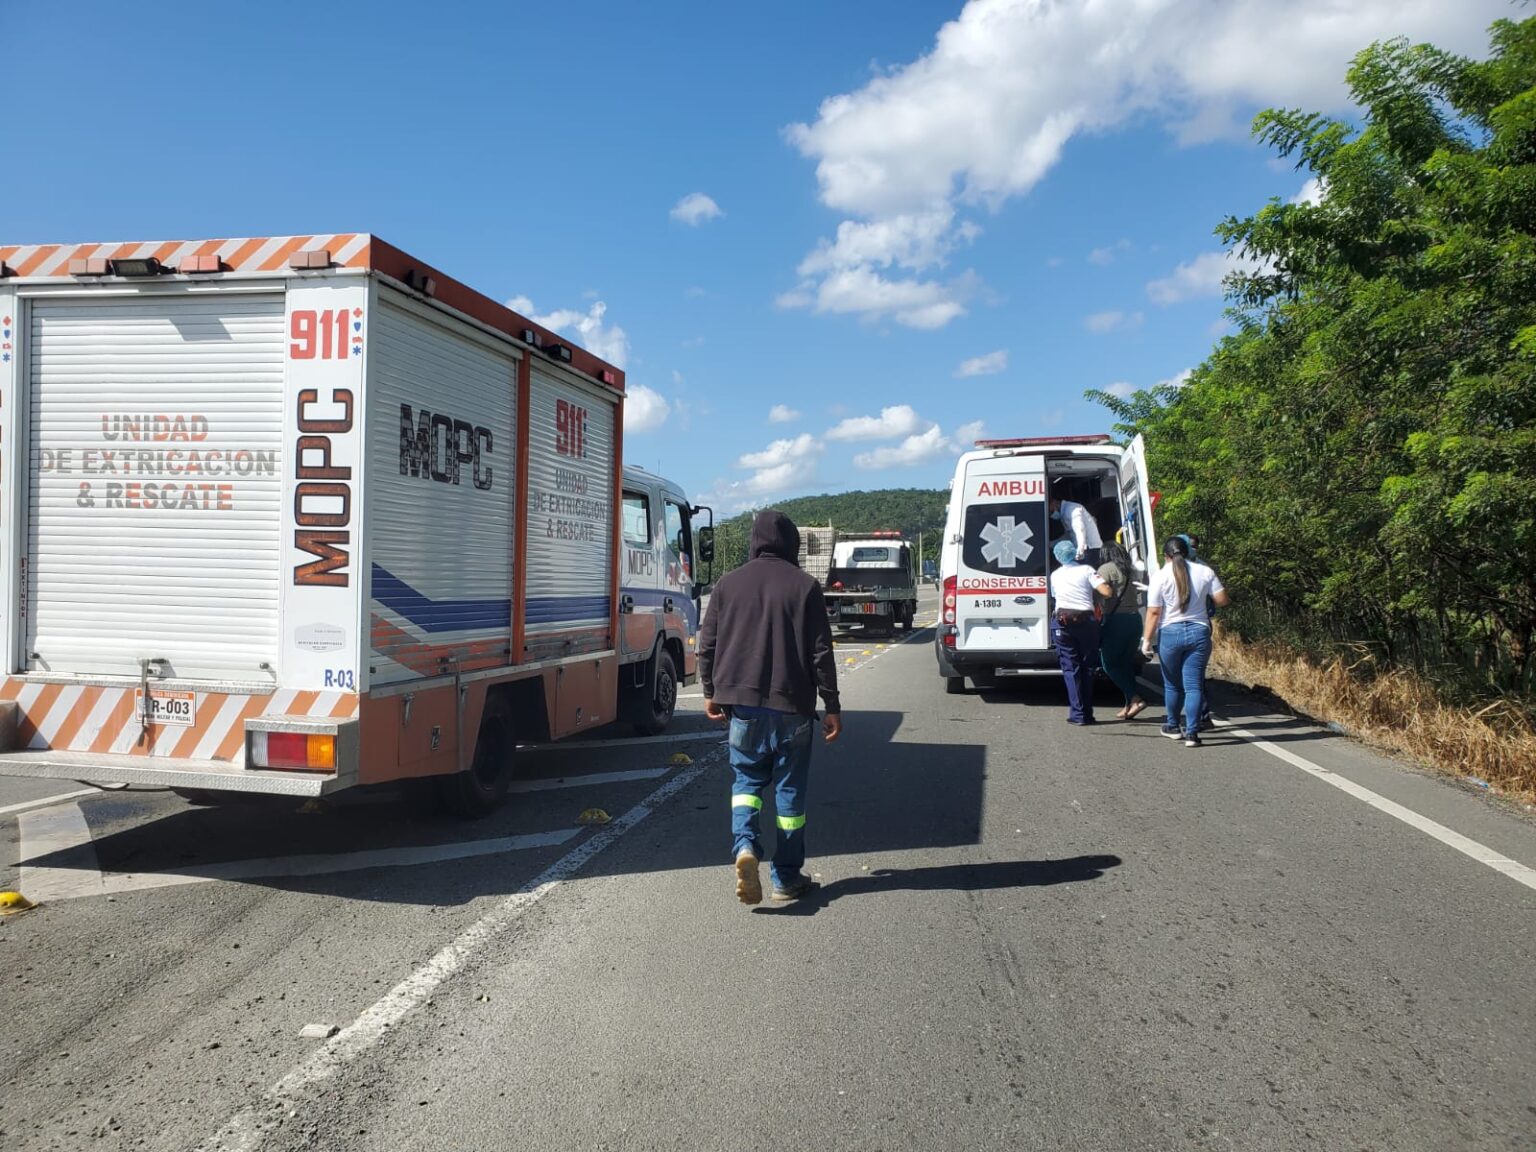 9-1-1 coordina asistencia en accidente de tránsito en Autopista Duarte